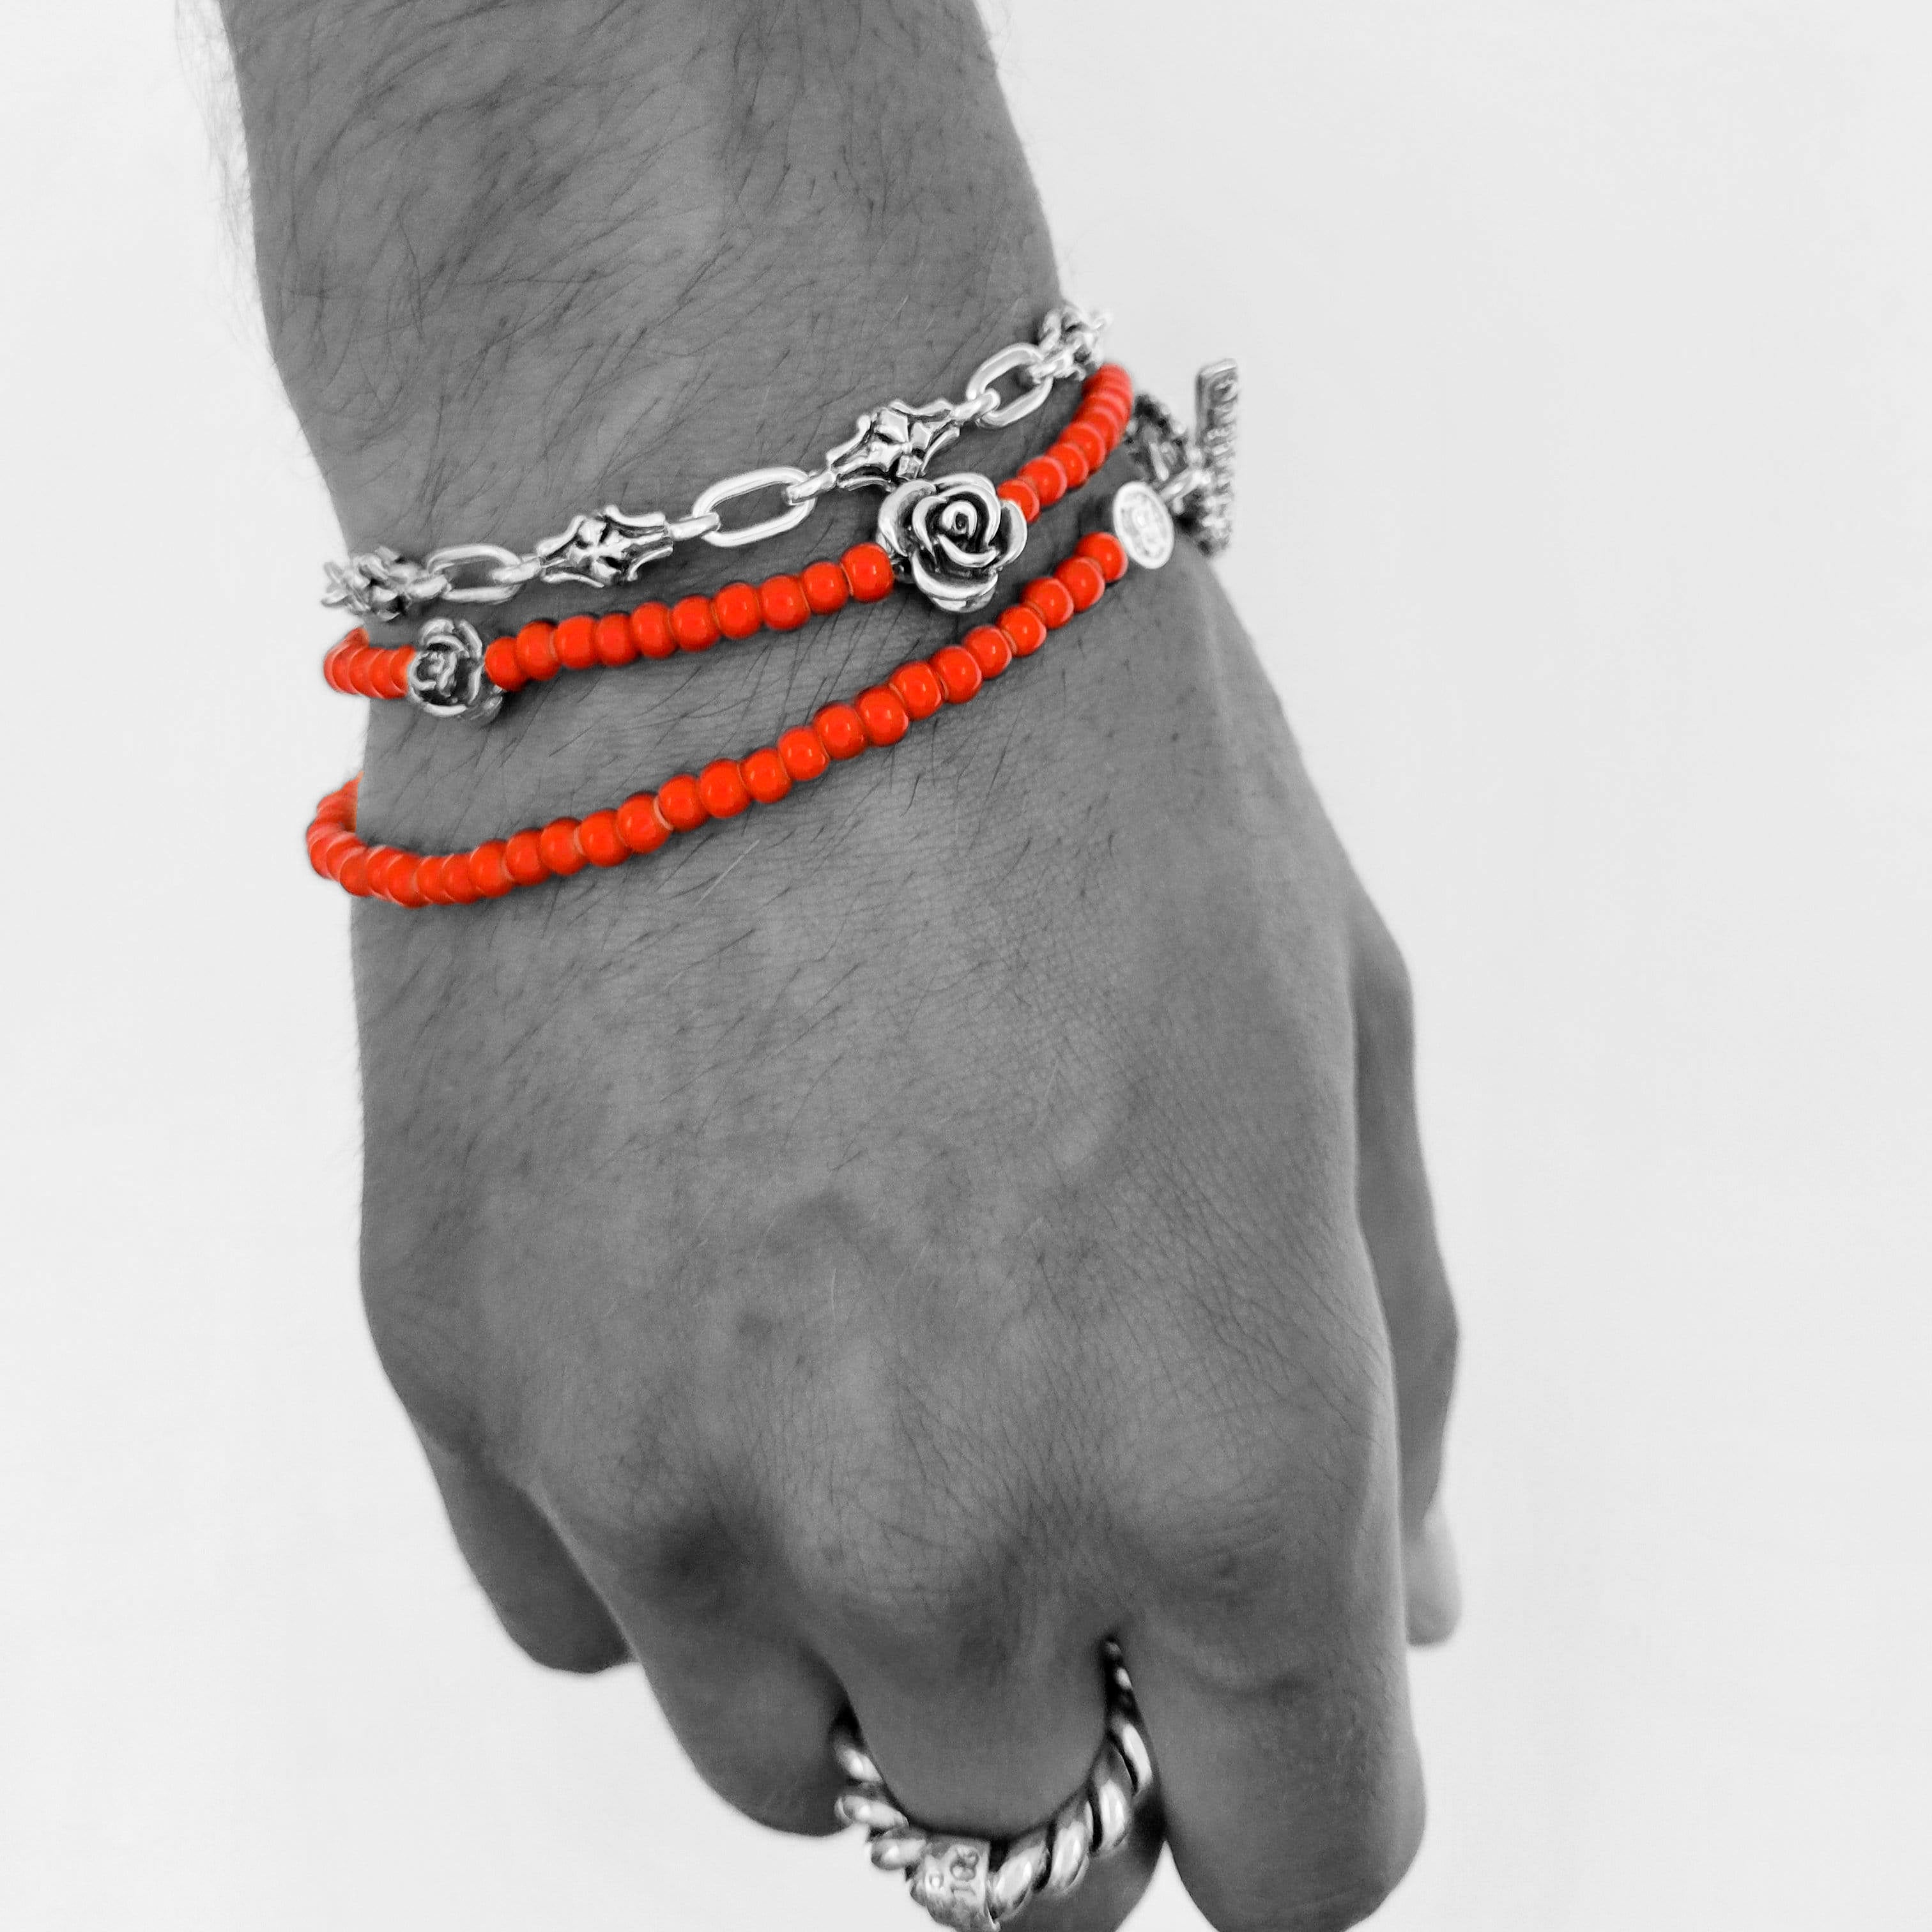 Bloodline Design Mens Bracelets Double Wrap Double Rose Bracelet shown on a model.